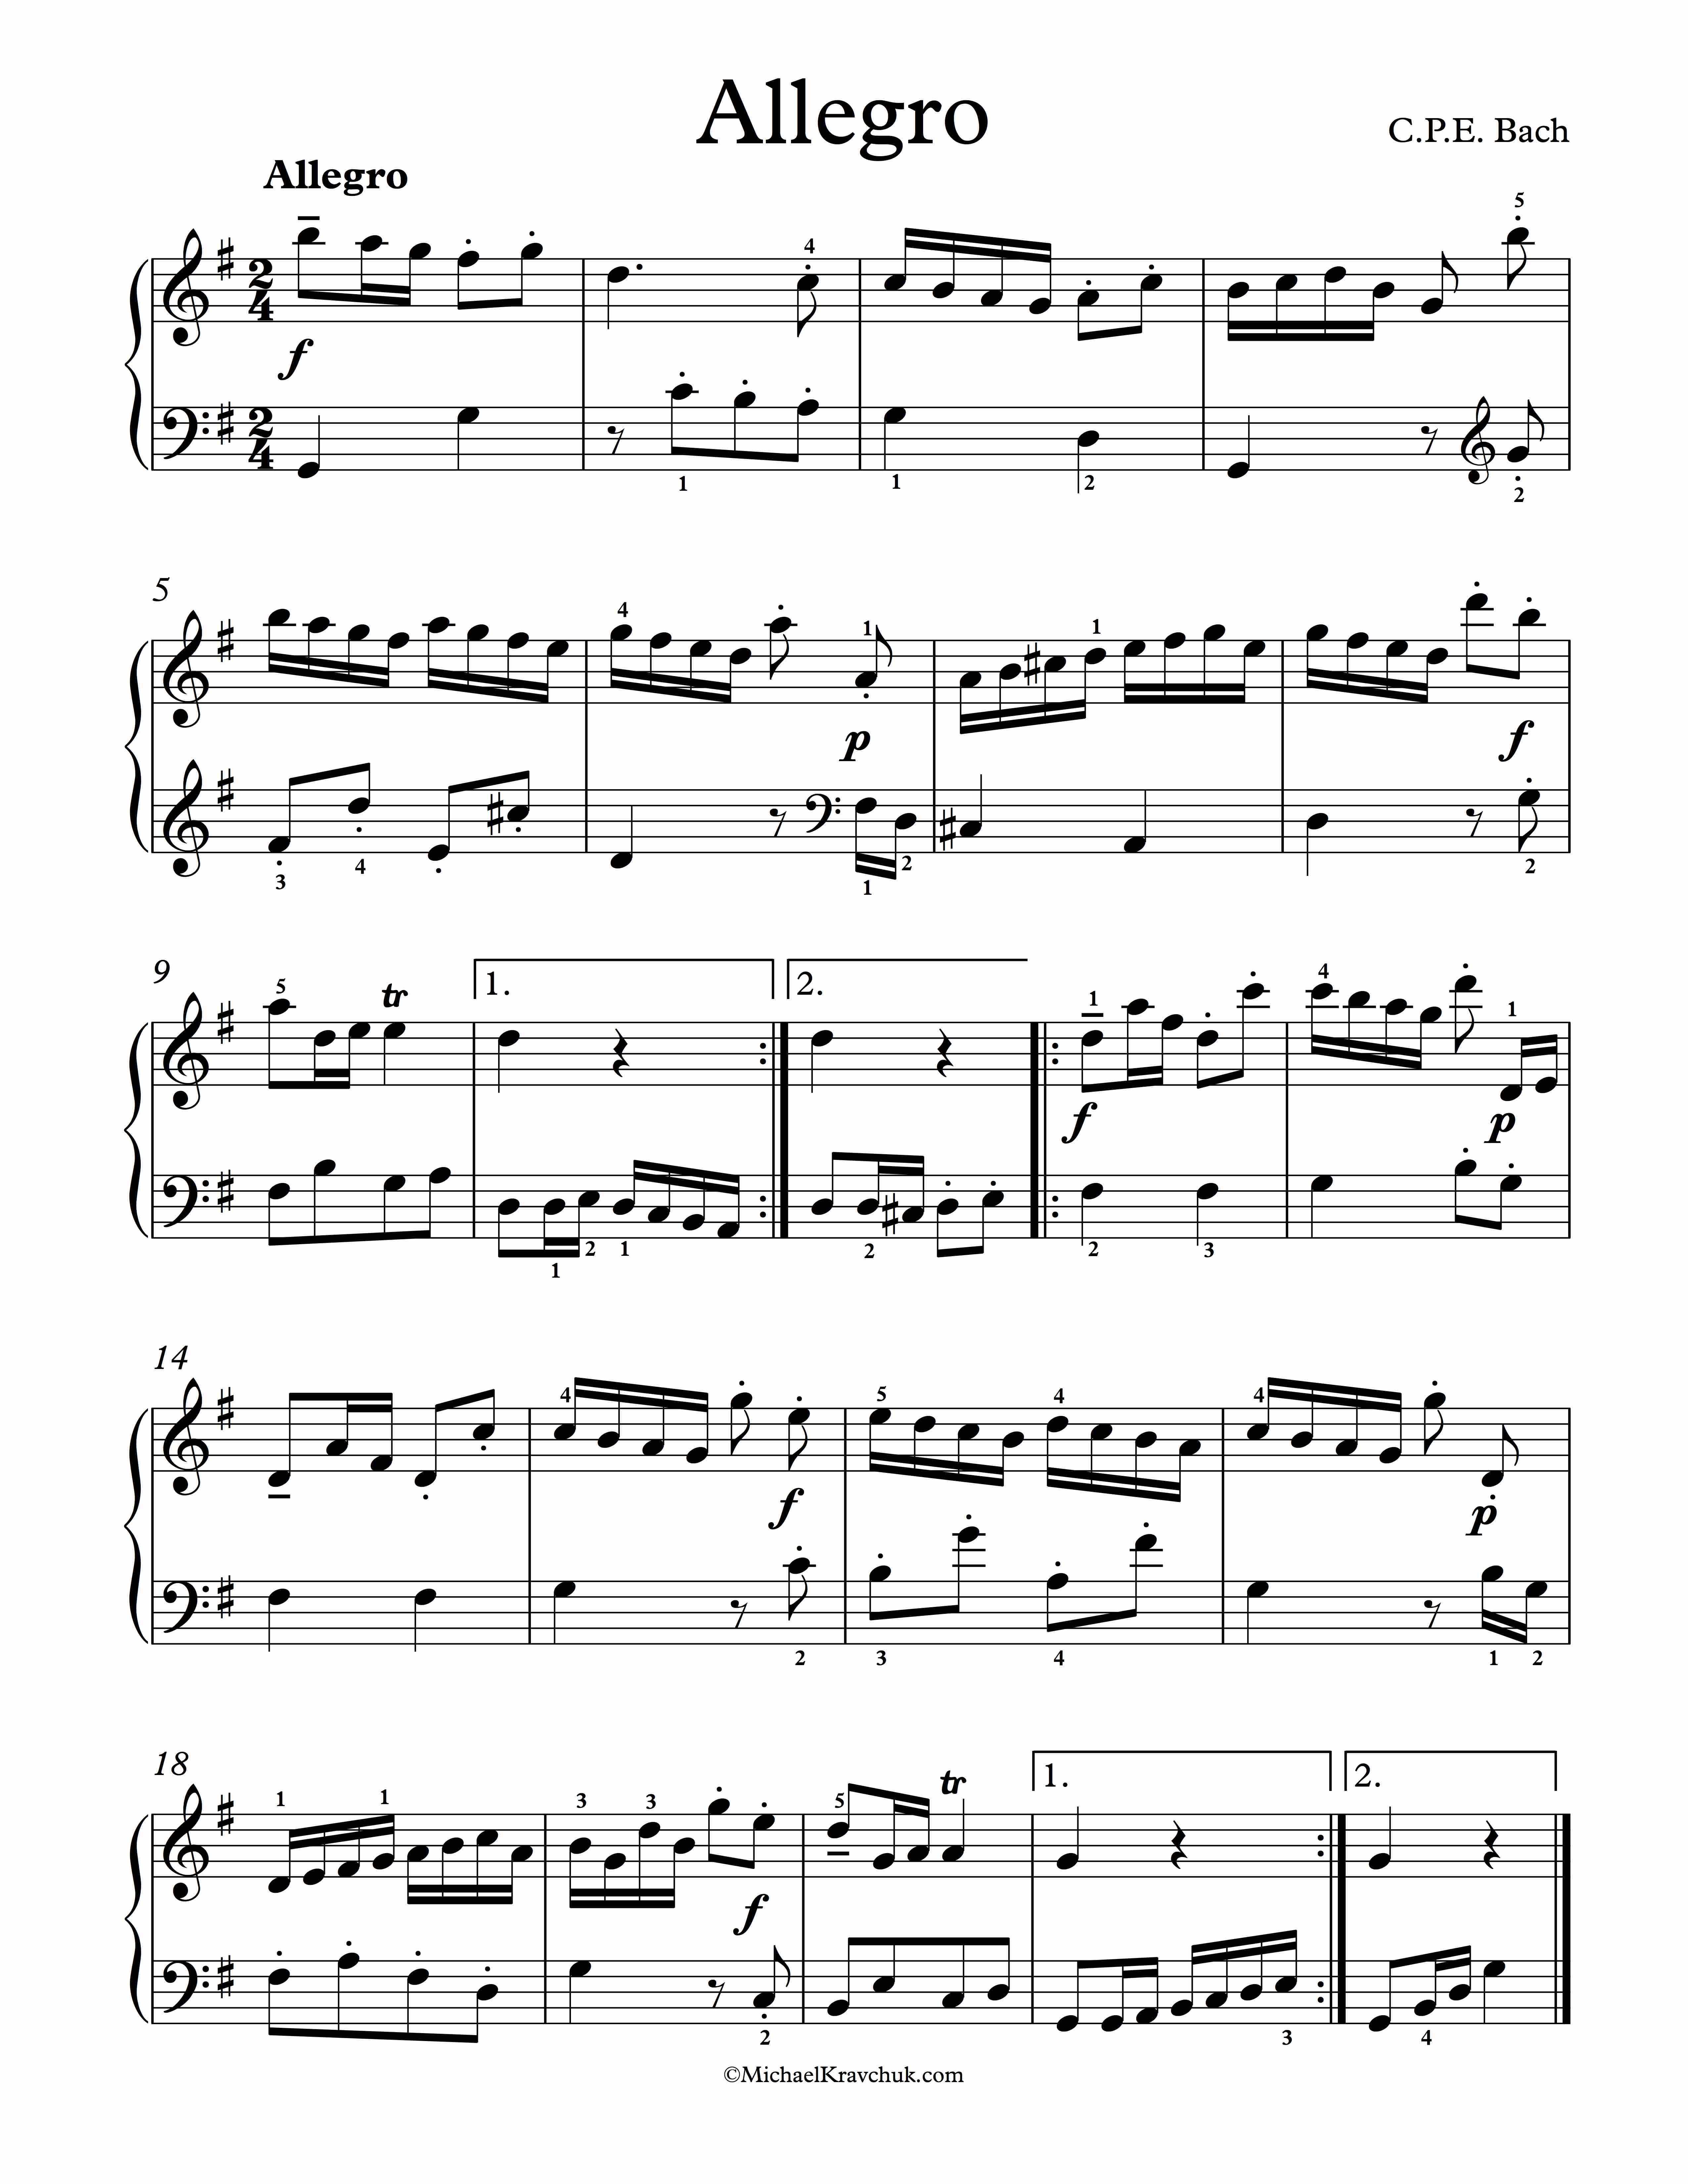 Free Piano Sheet Music - Allegro - C.P.E. Bach